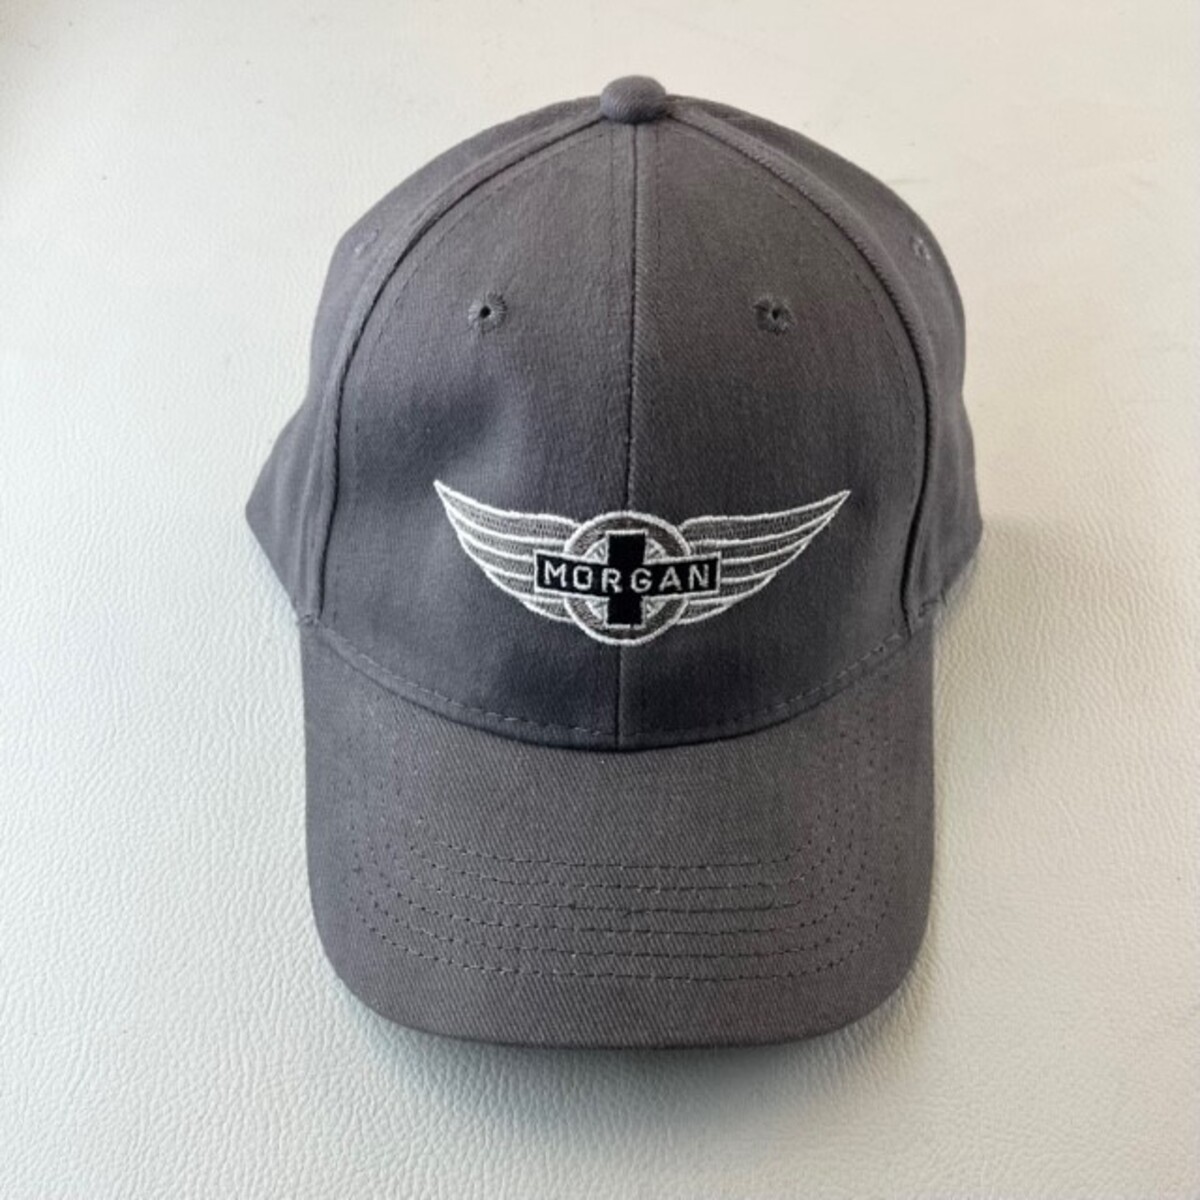 Morgan wings baseball cap - grey :: Mog Parts, Morgan Car Parts ...